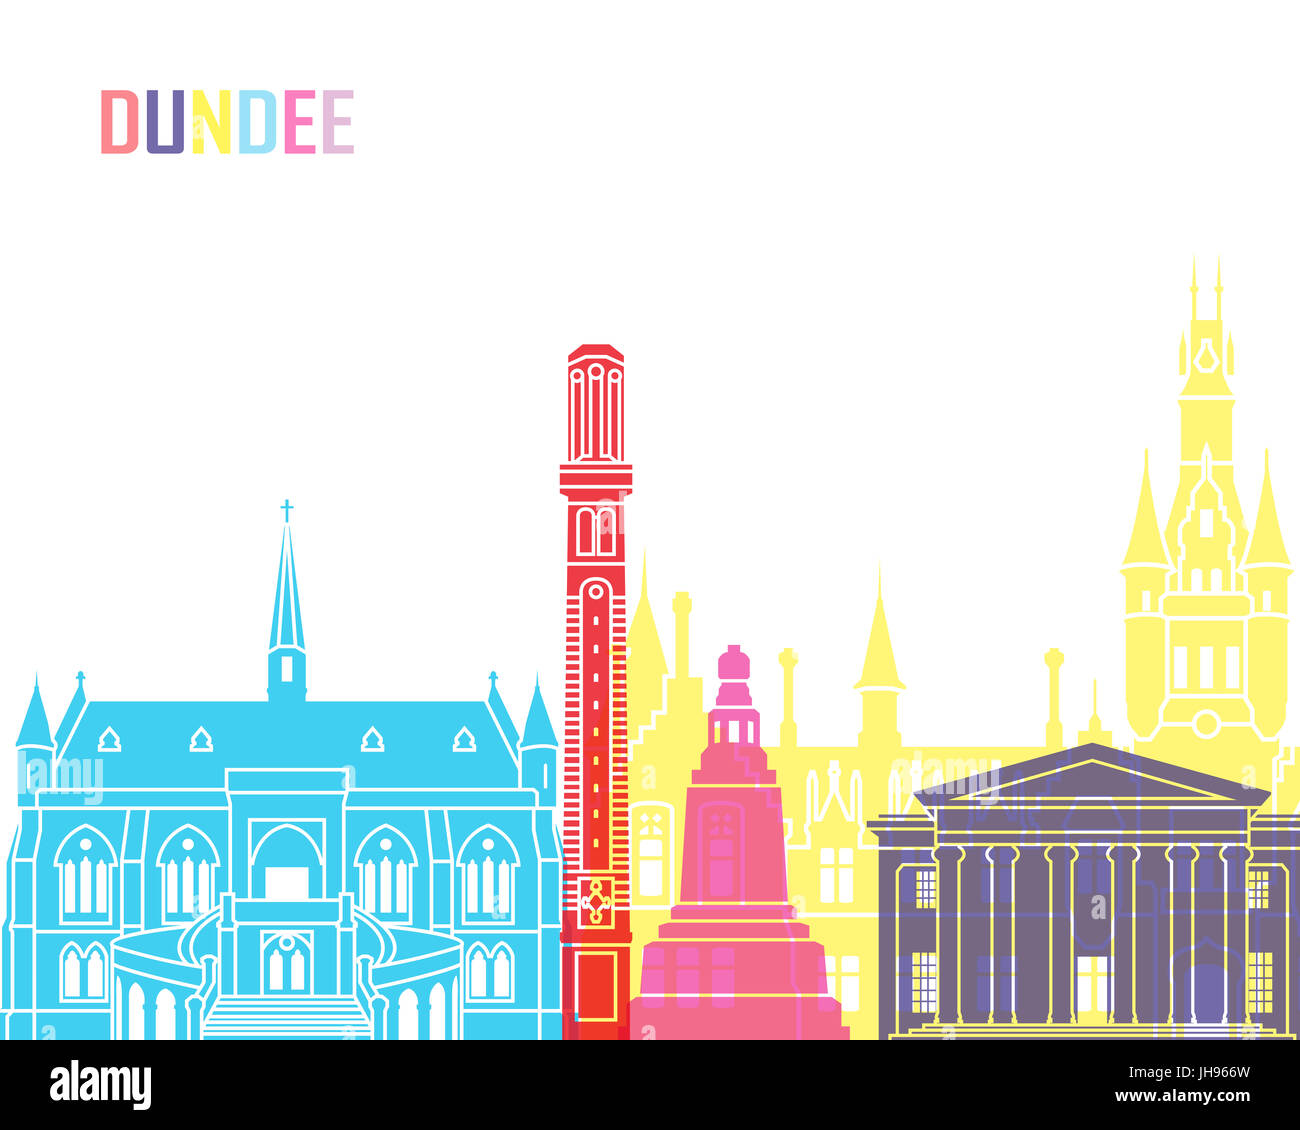 Dundee skyline pop in editable vector file Stock Photo